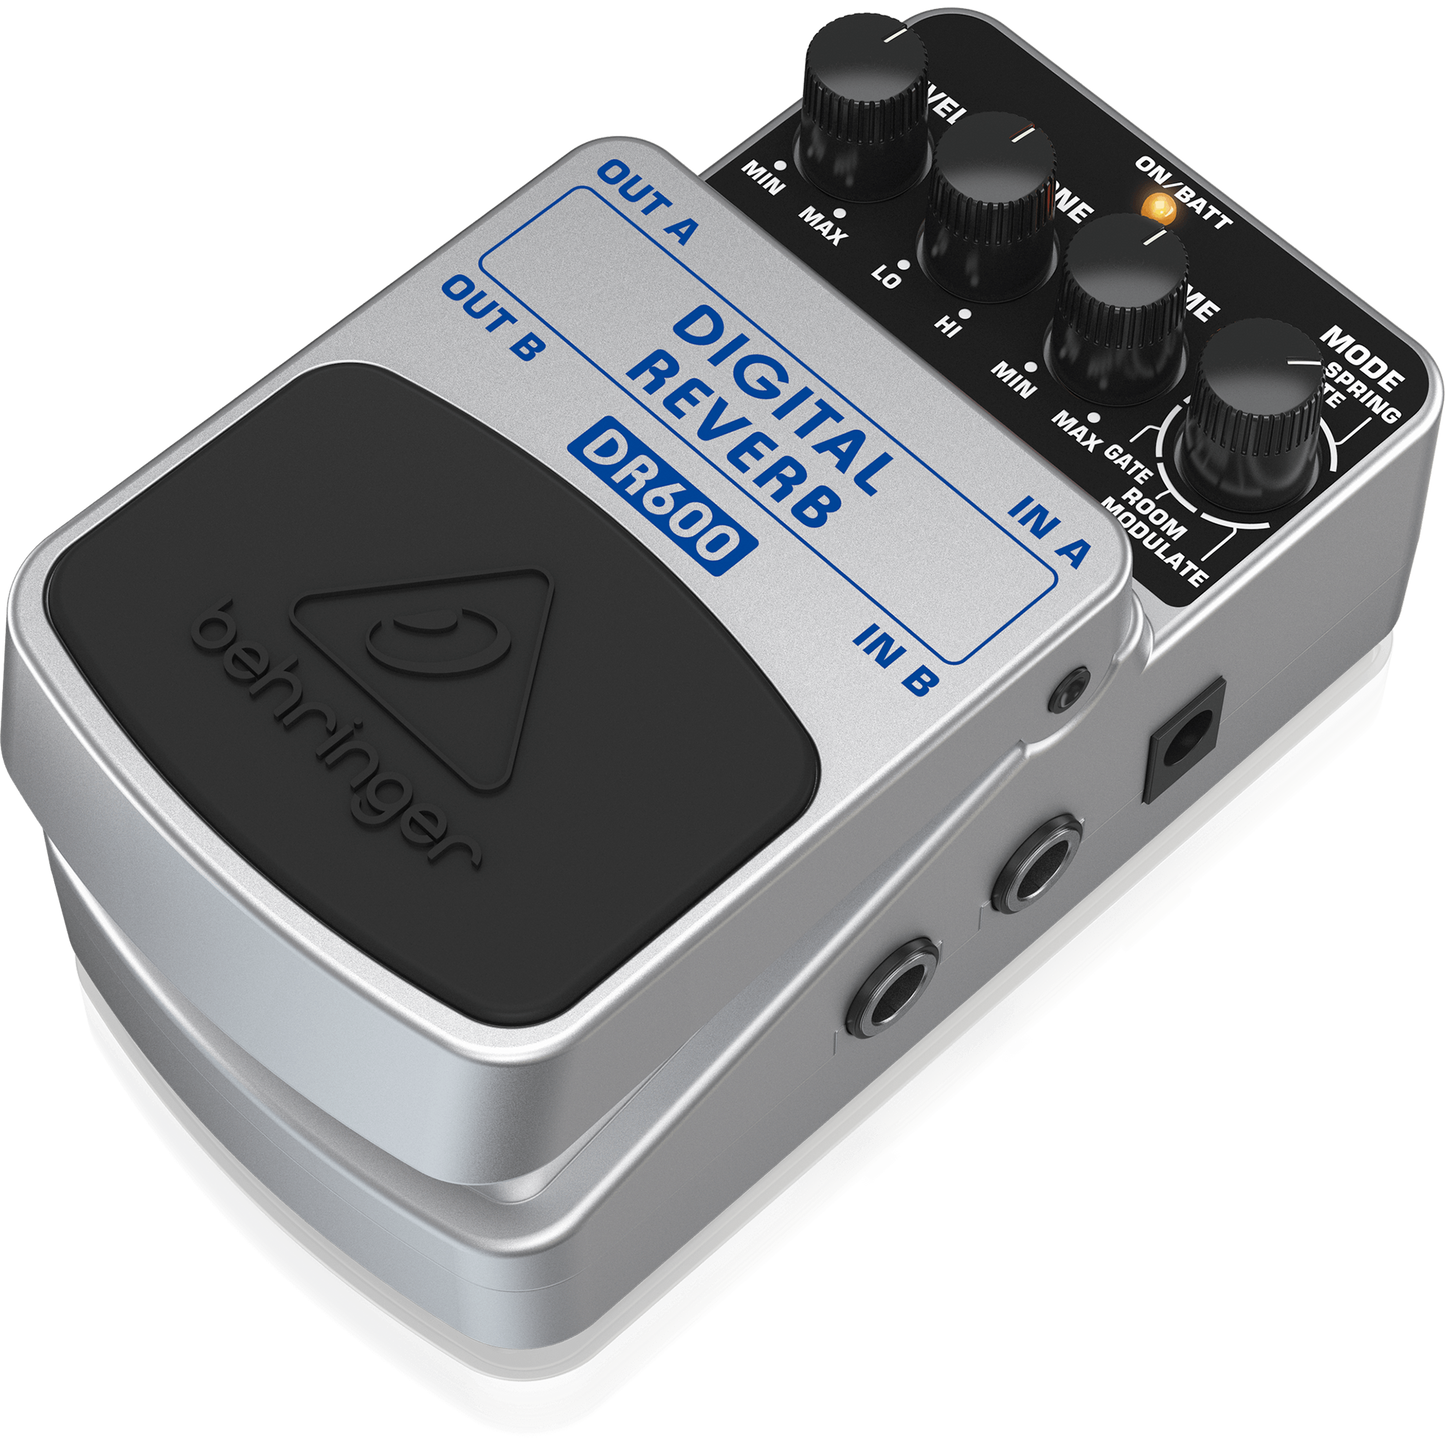 Behringer DR600 Digital Stereo Reverb Effects Pedal